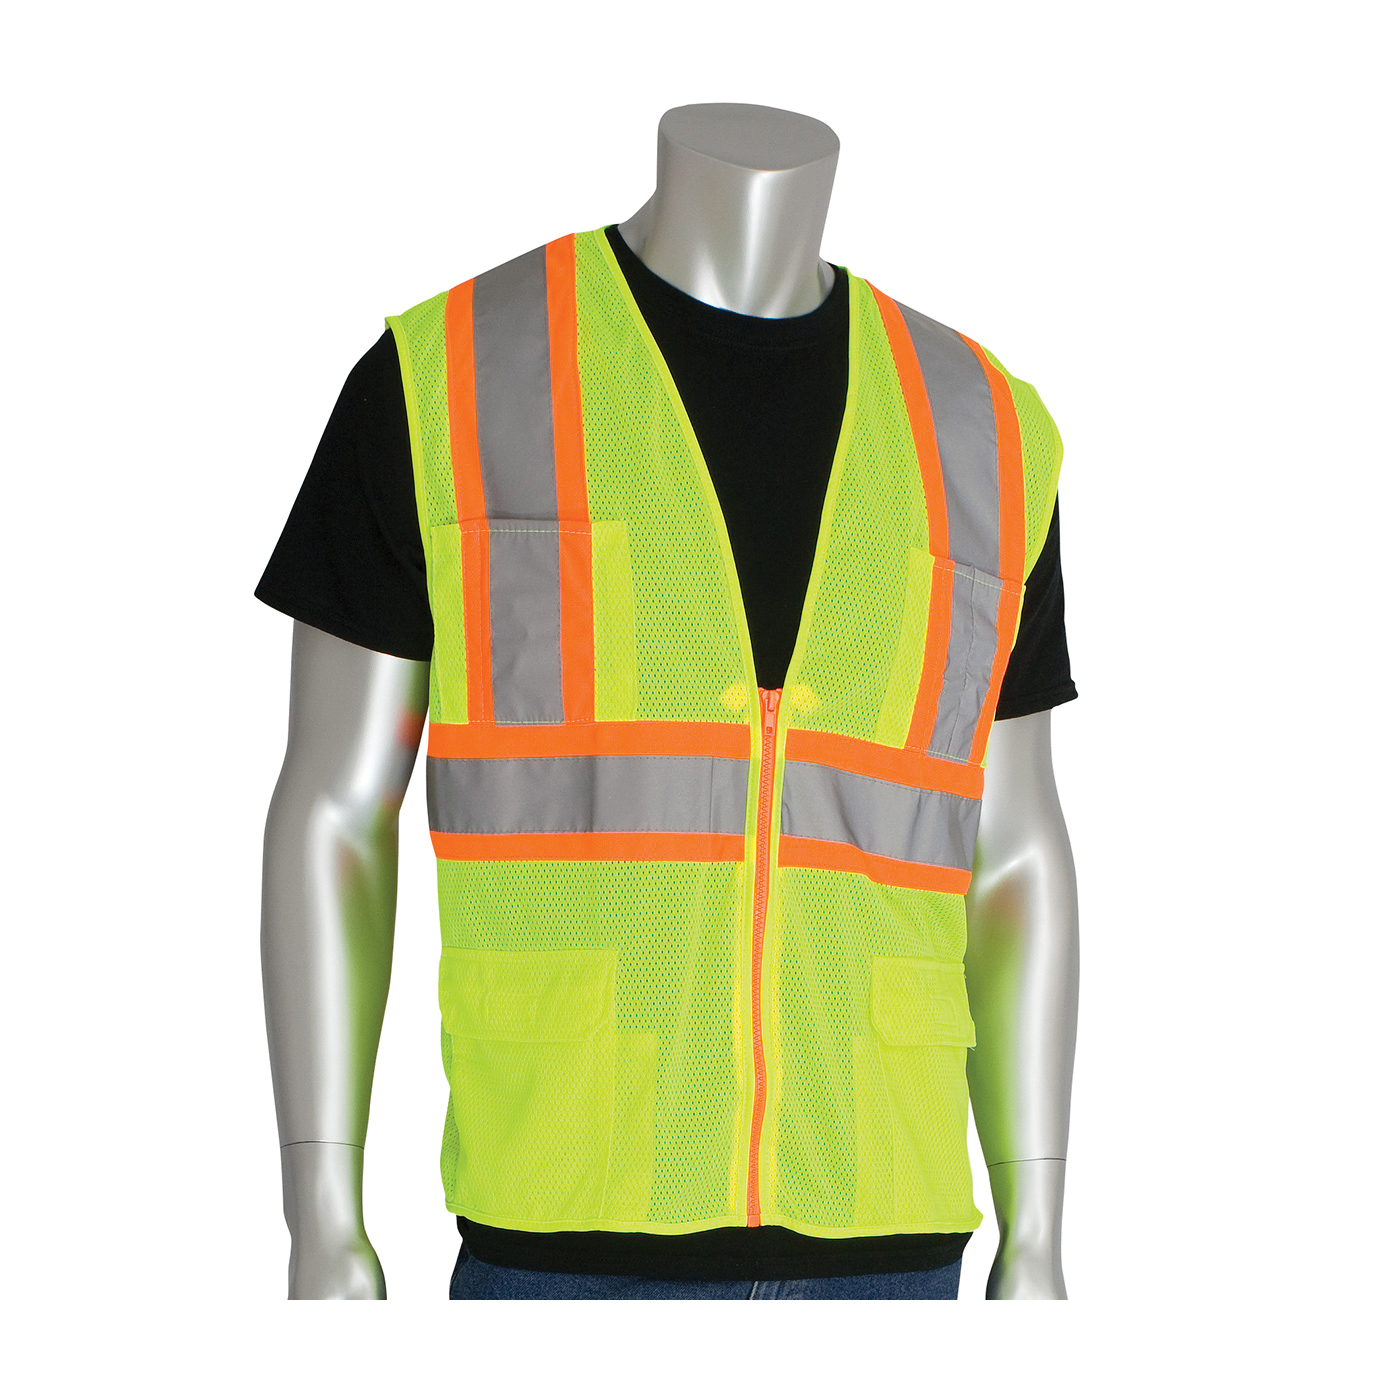 PIP® 302-MAPMLY-XL 2-Tone Premium Surveyor Safety Vest, XL, Hi-Viz Lime Yellow, Polyester, Zipper Closure, 11 Pockets, ANSI Class: Class 2, Specifications Met: ANSI 107 Type R